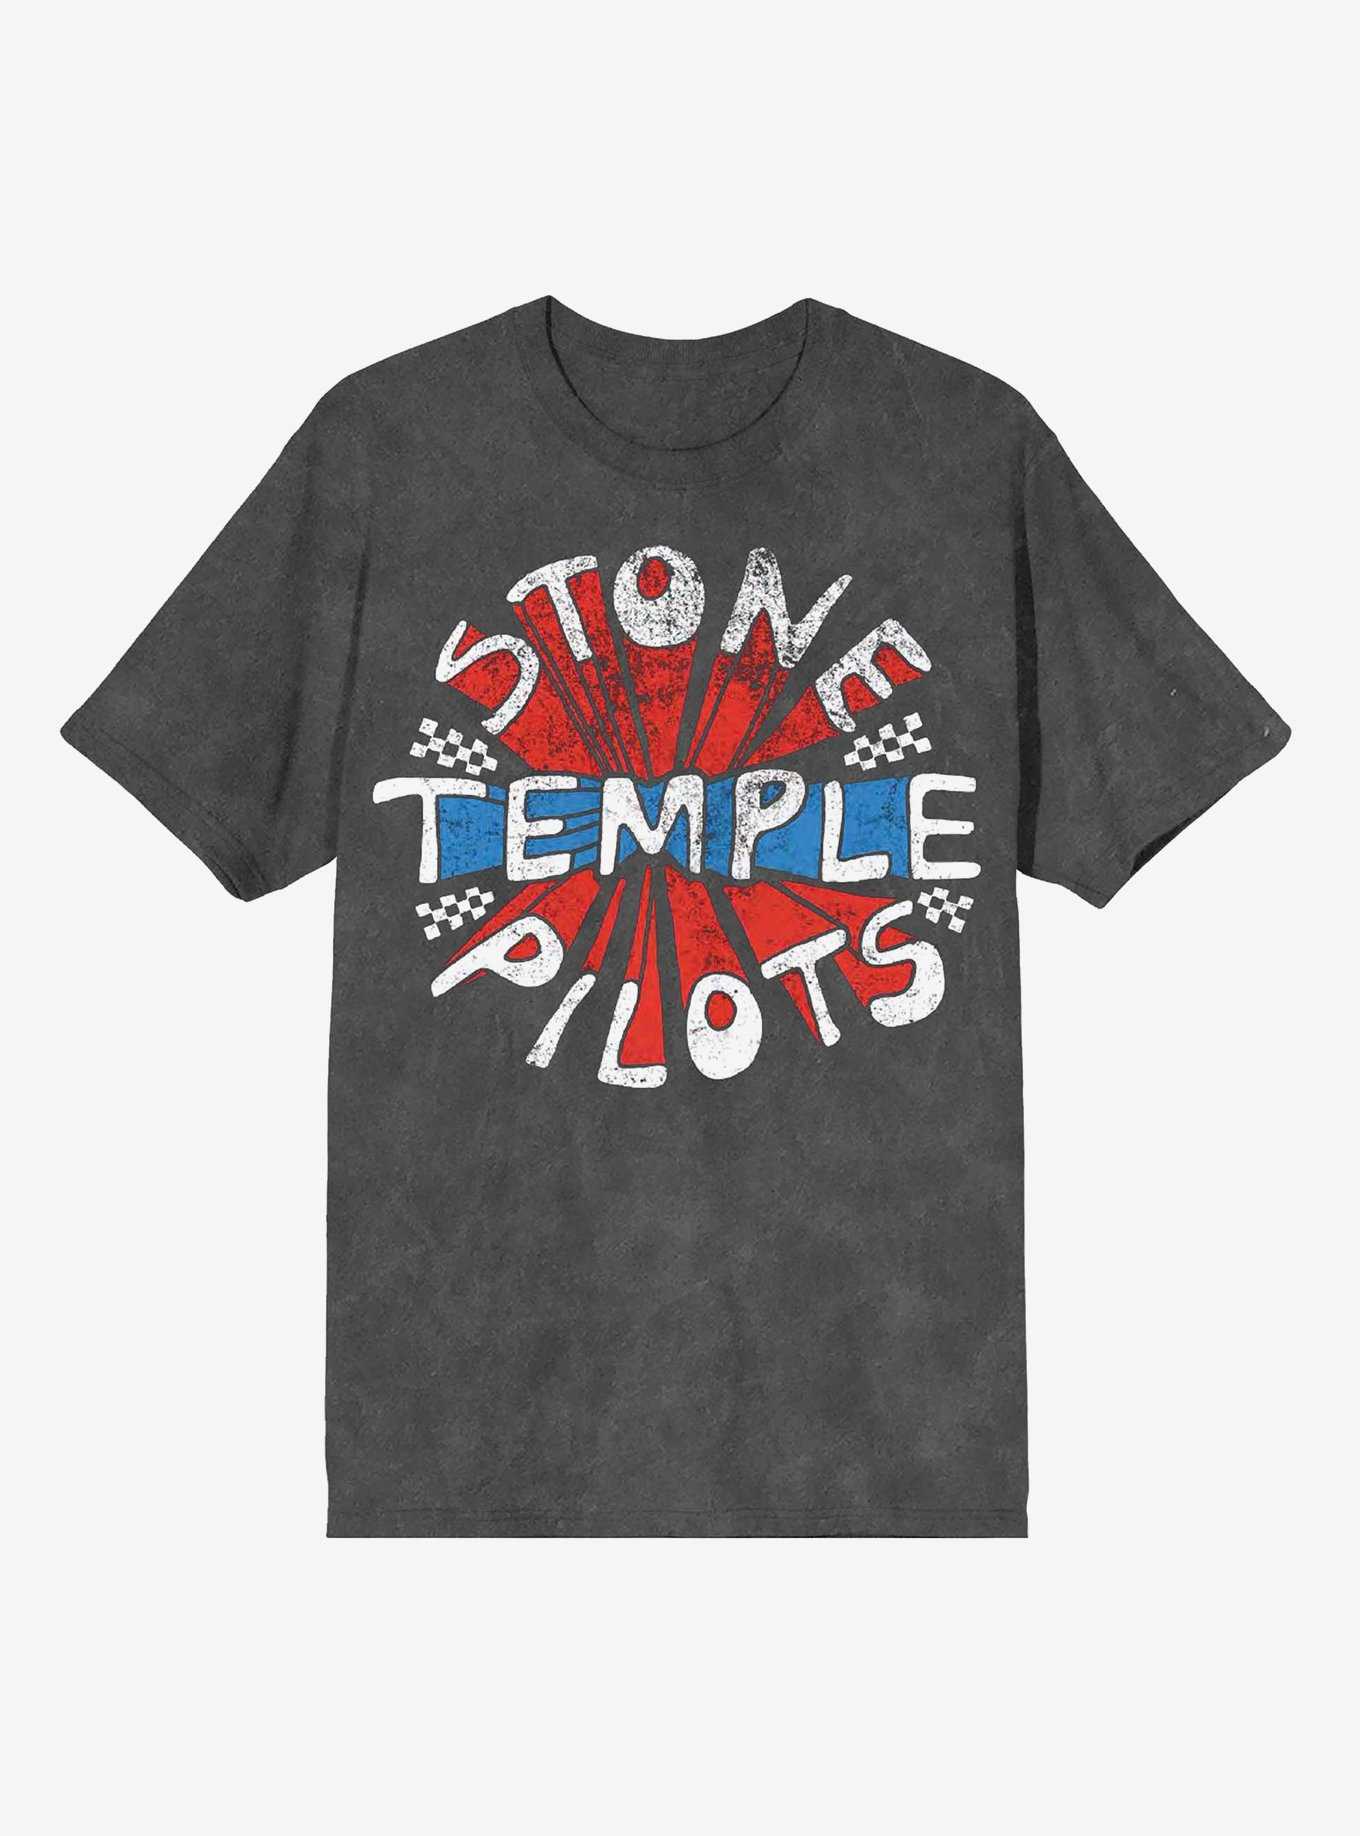 Stone Temple Pilots Checkered Flag T-Shirt, , hi-res